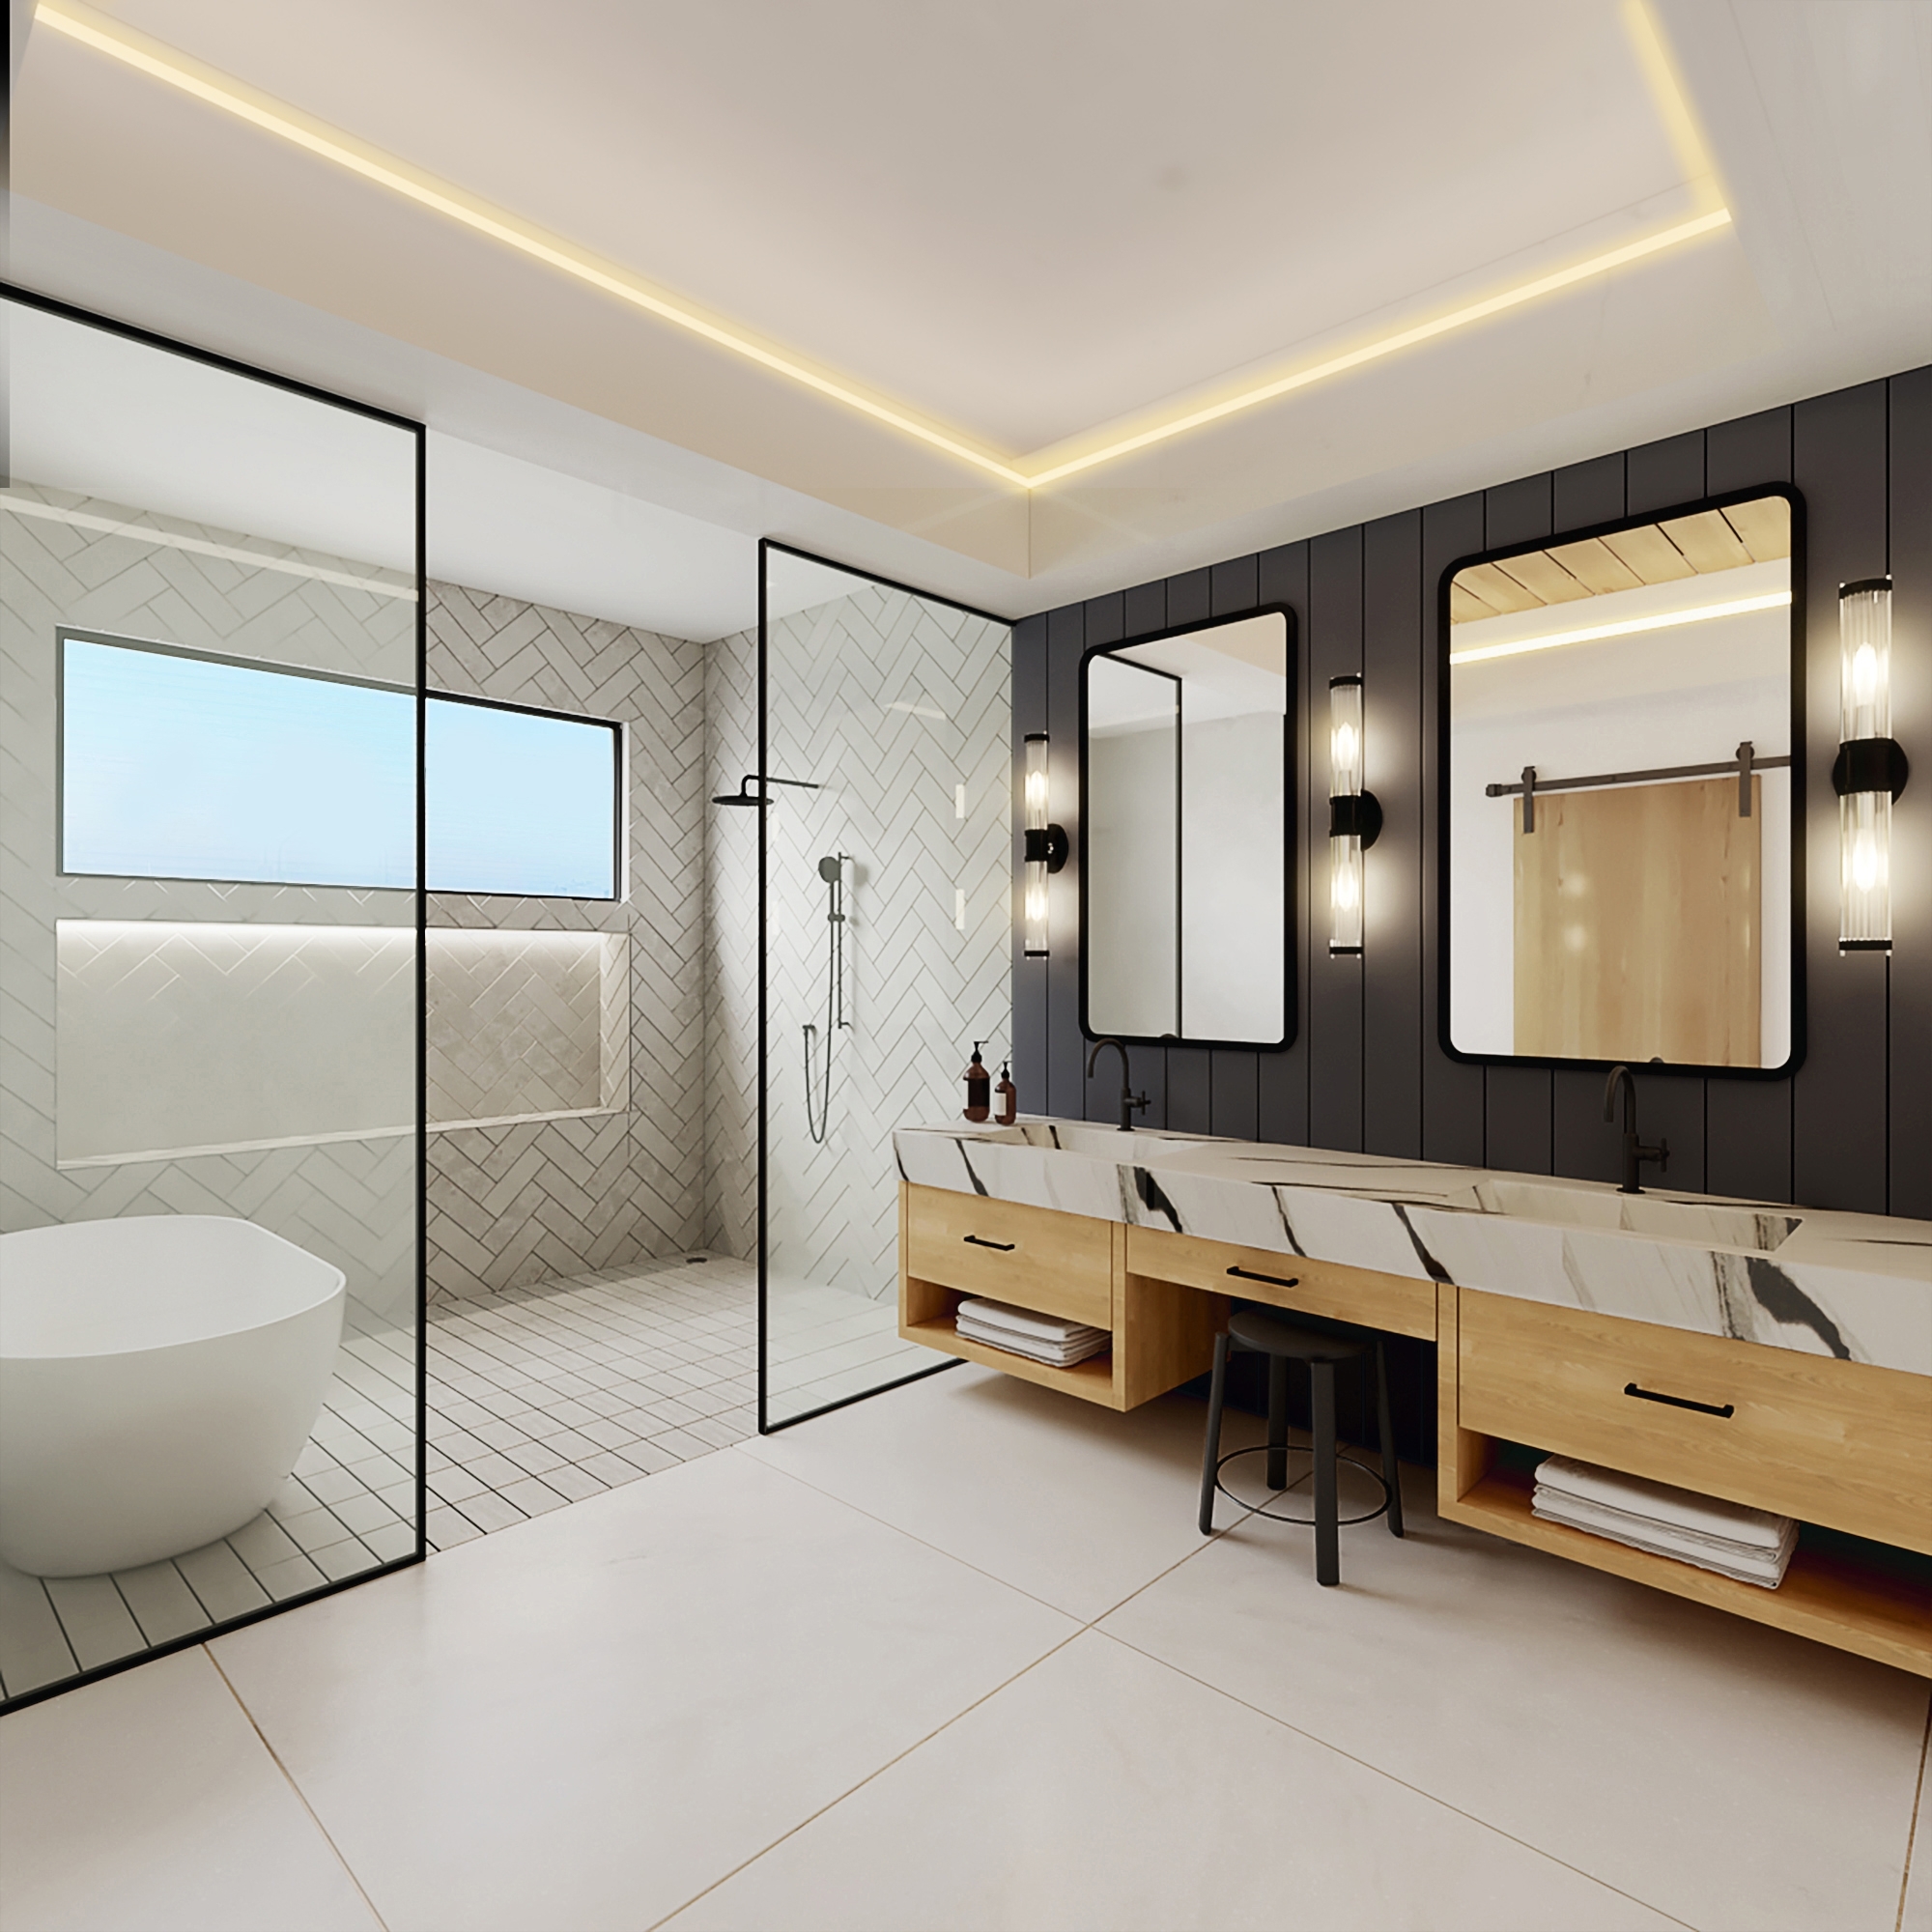 Renovated bathroom with white tiling and black vanity backsplash